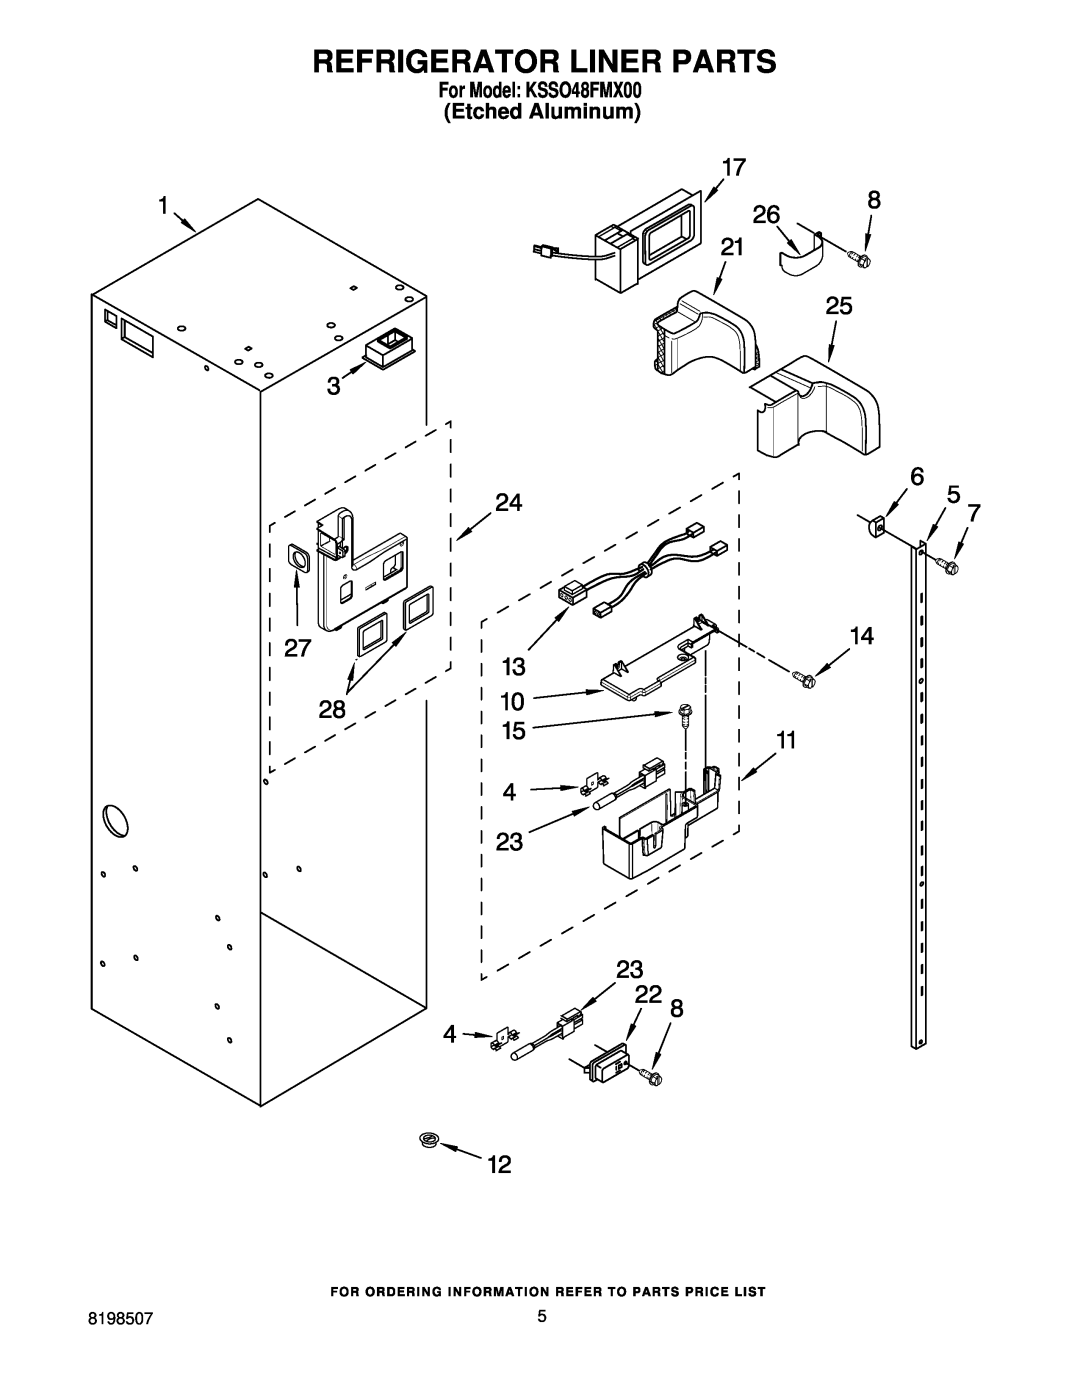 KitchenAid manual Refrigerator Liner Parts, For Model KSSO48FMX00 Etched Aluminum 